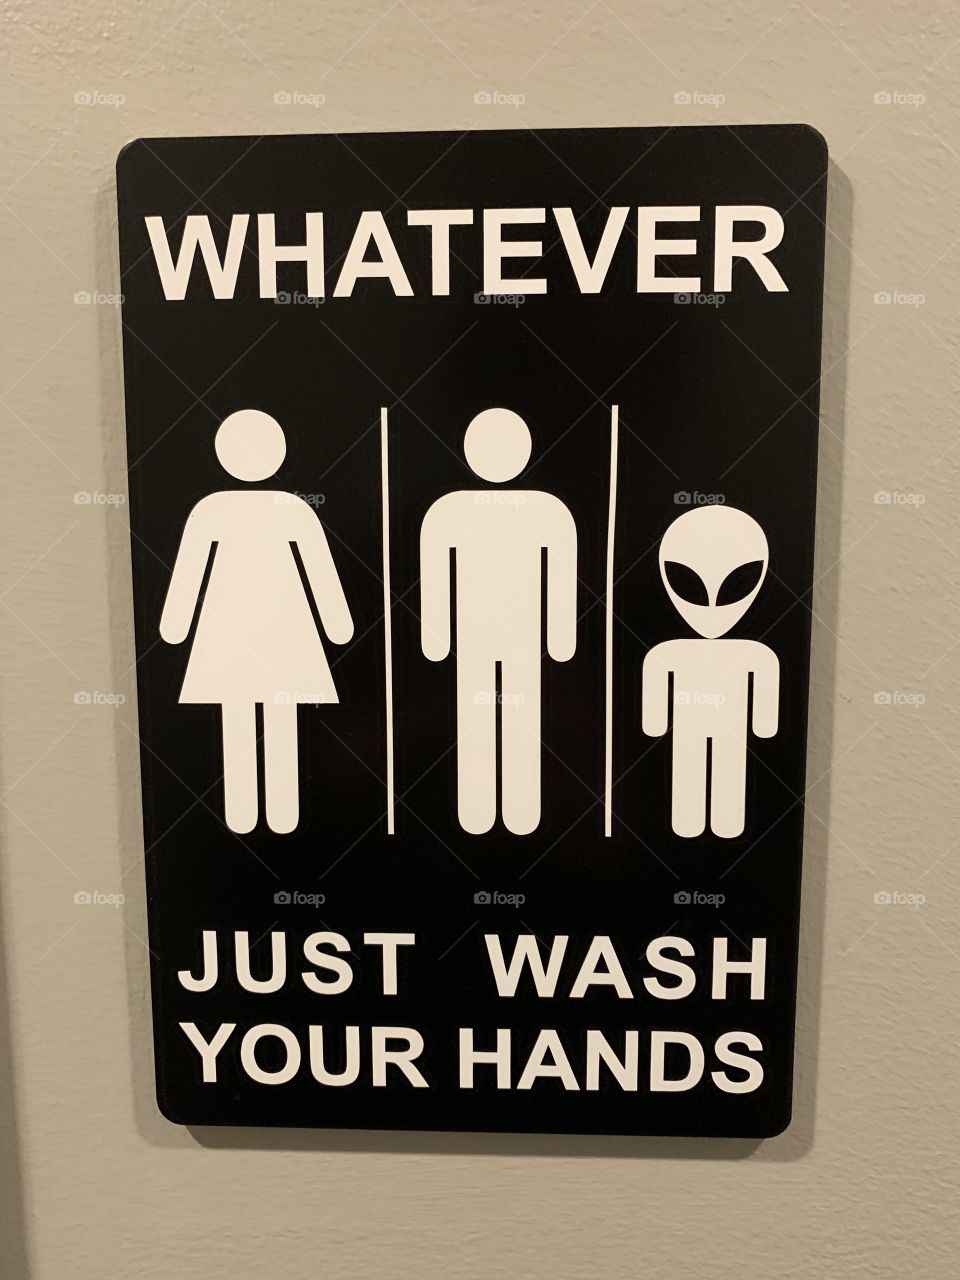 Funny washroom signage